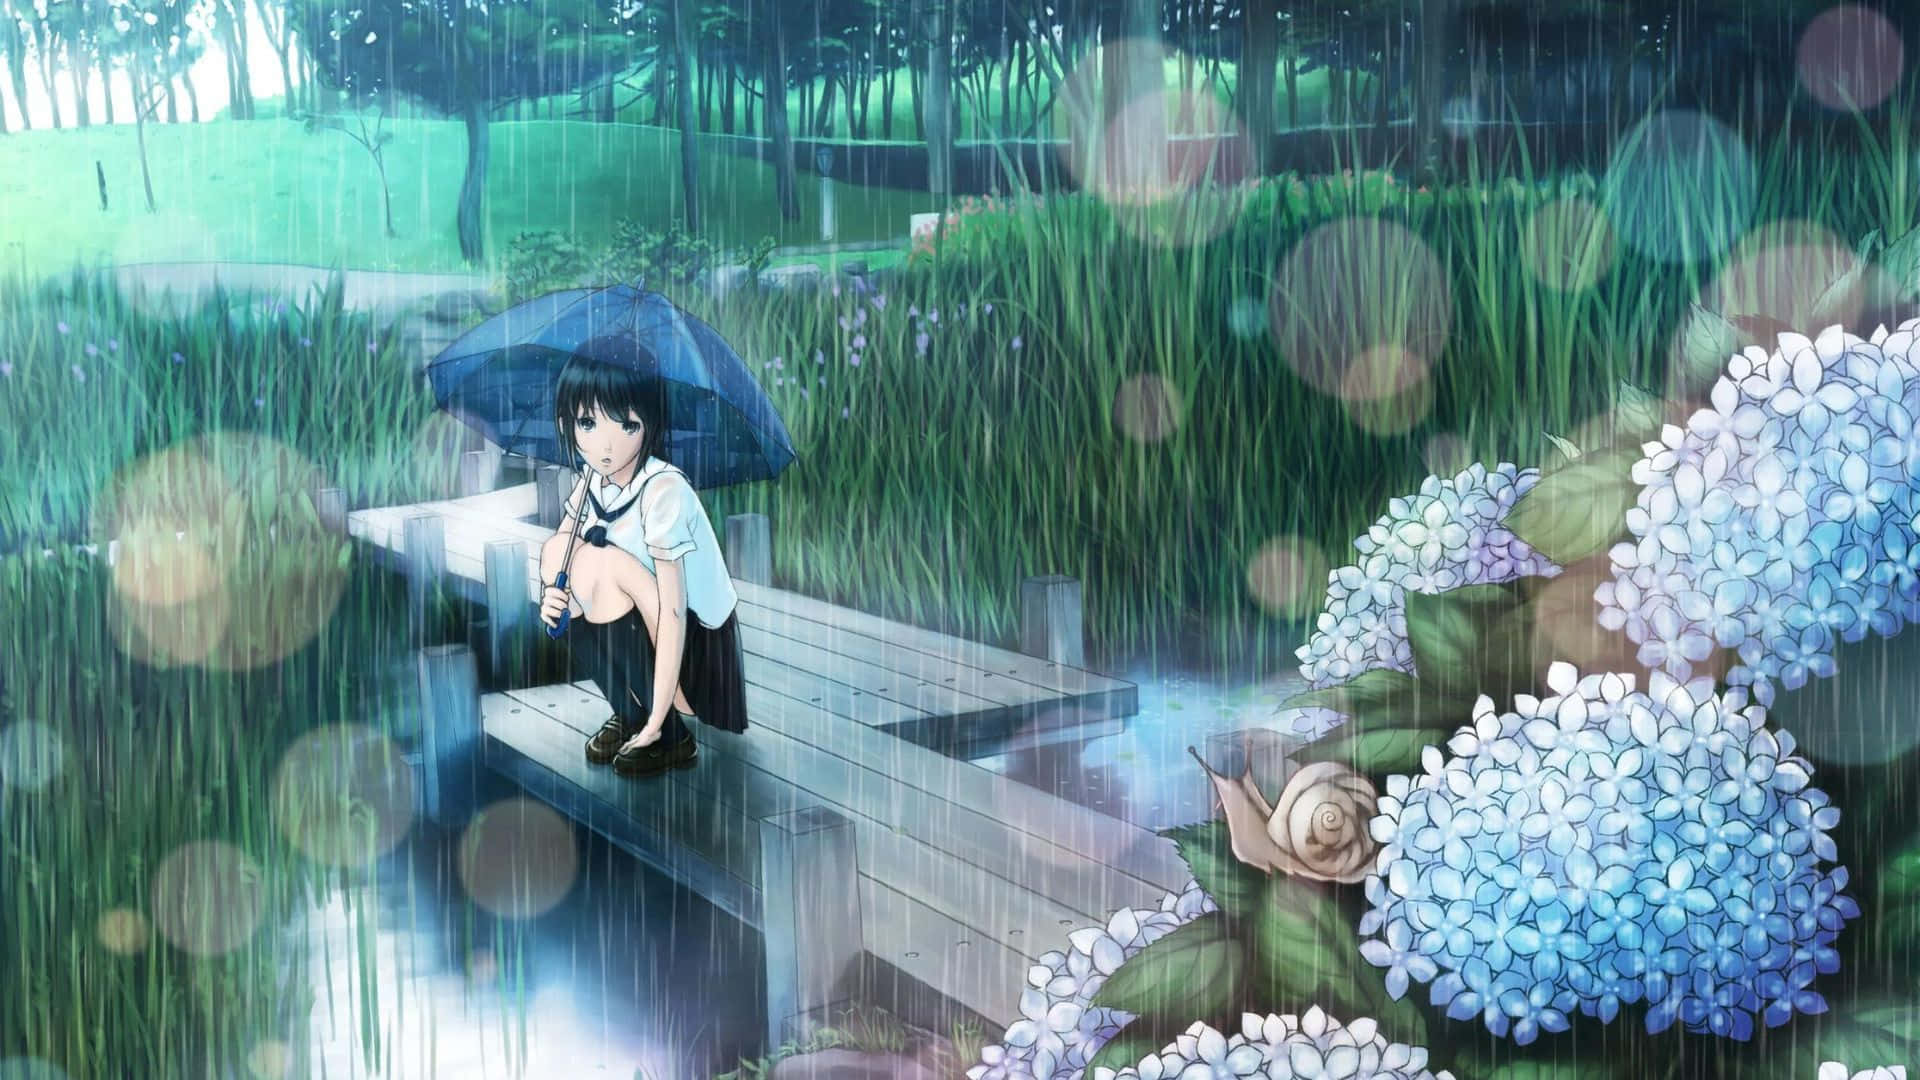 A peaceful rain falls on a lone figure against a moonlit sky